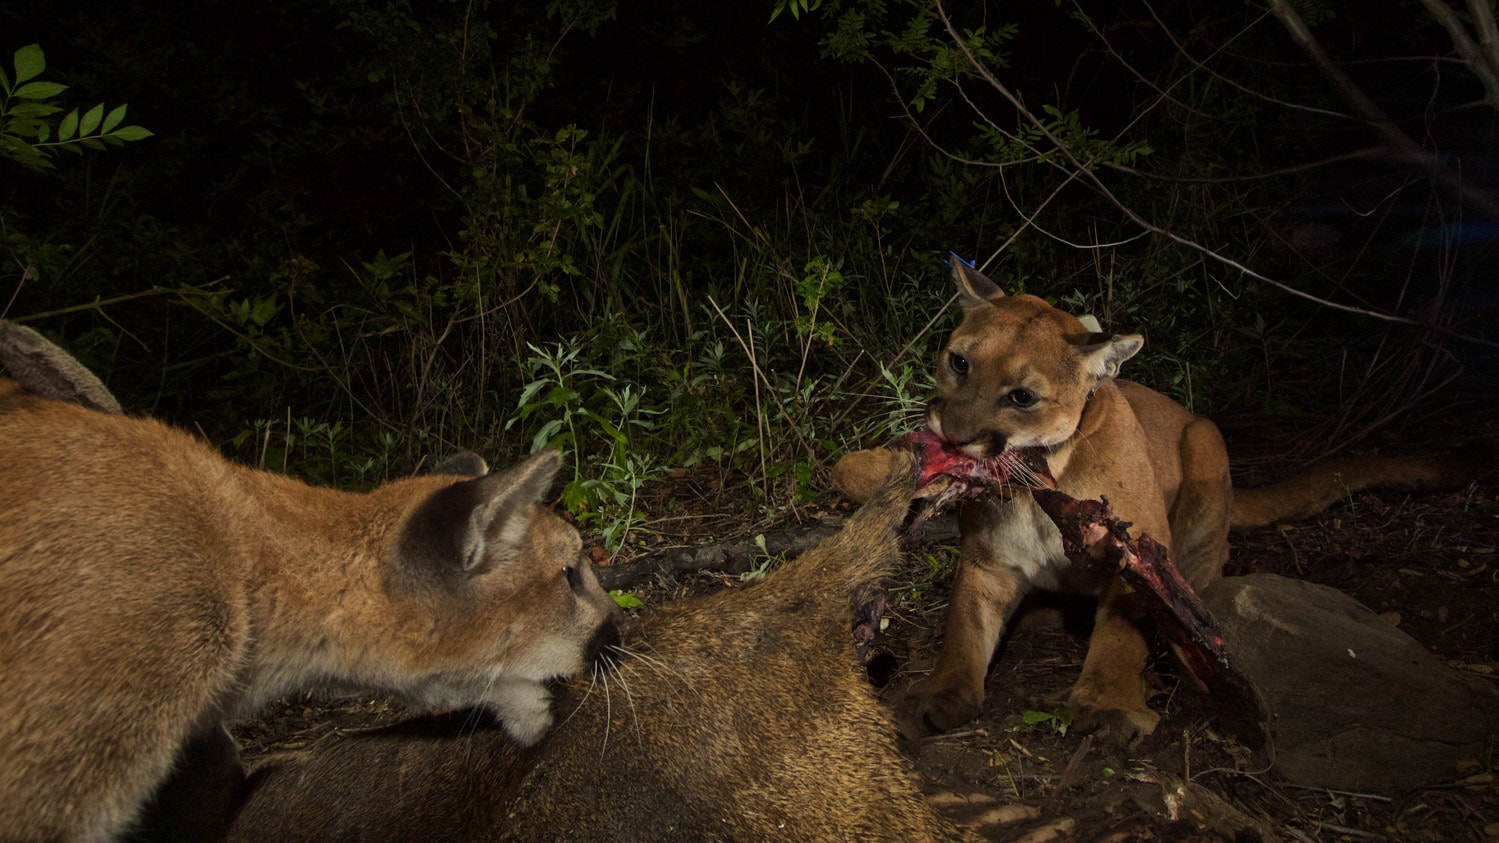 Cougars Mountain Lions feeding